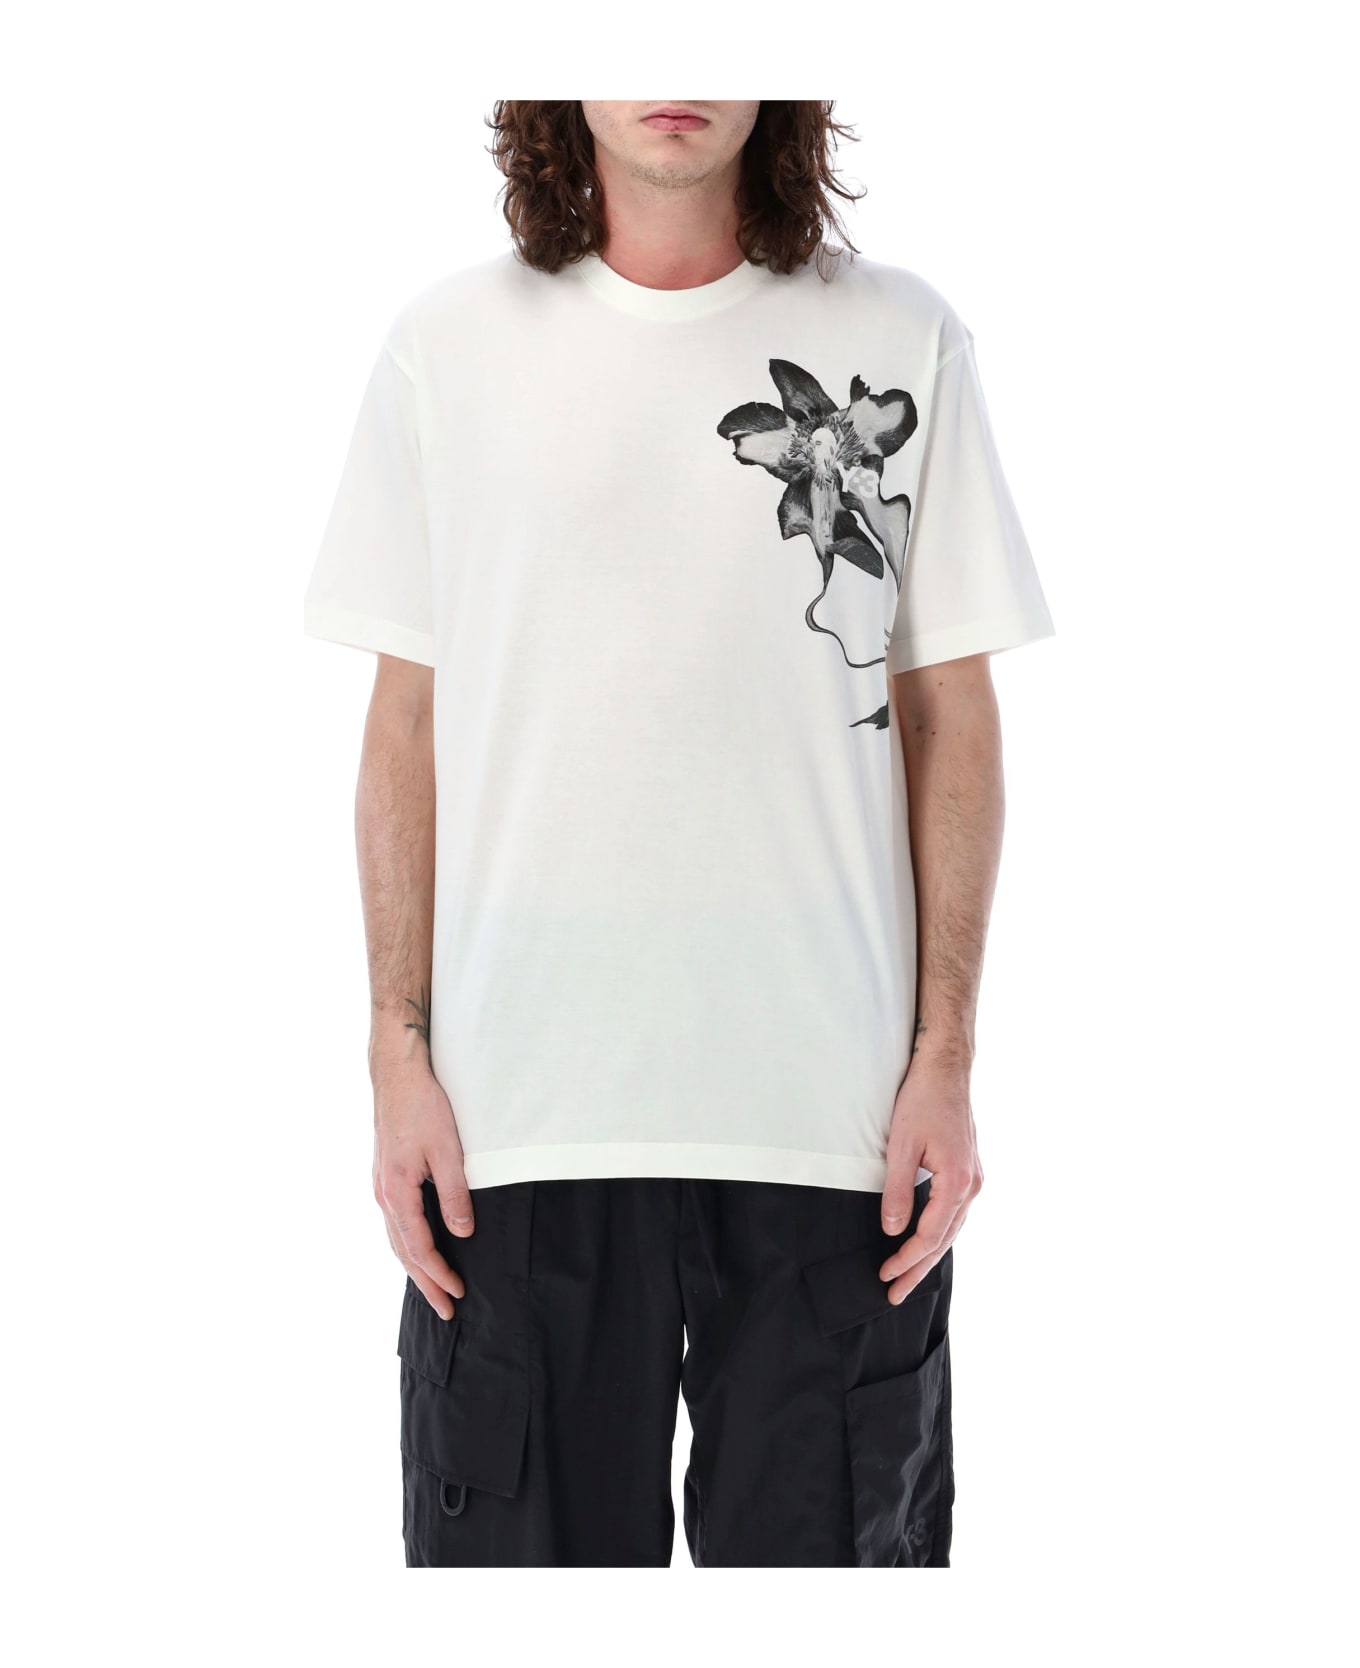 Y-3 Graphic Print T-shirt - WHITE Tシャツ